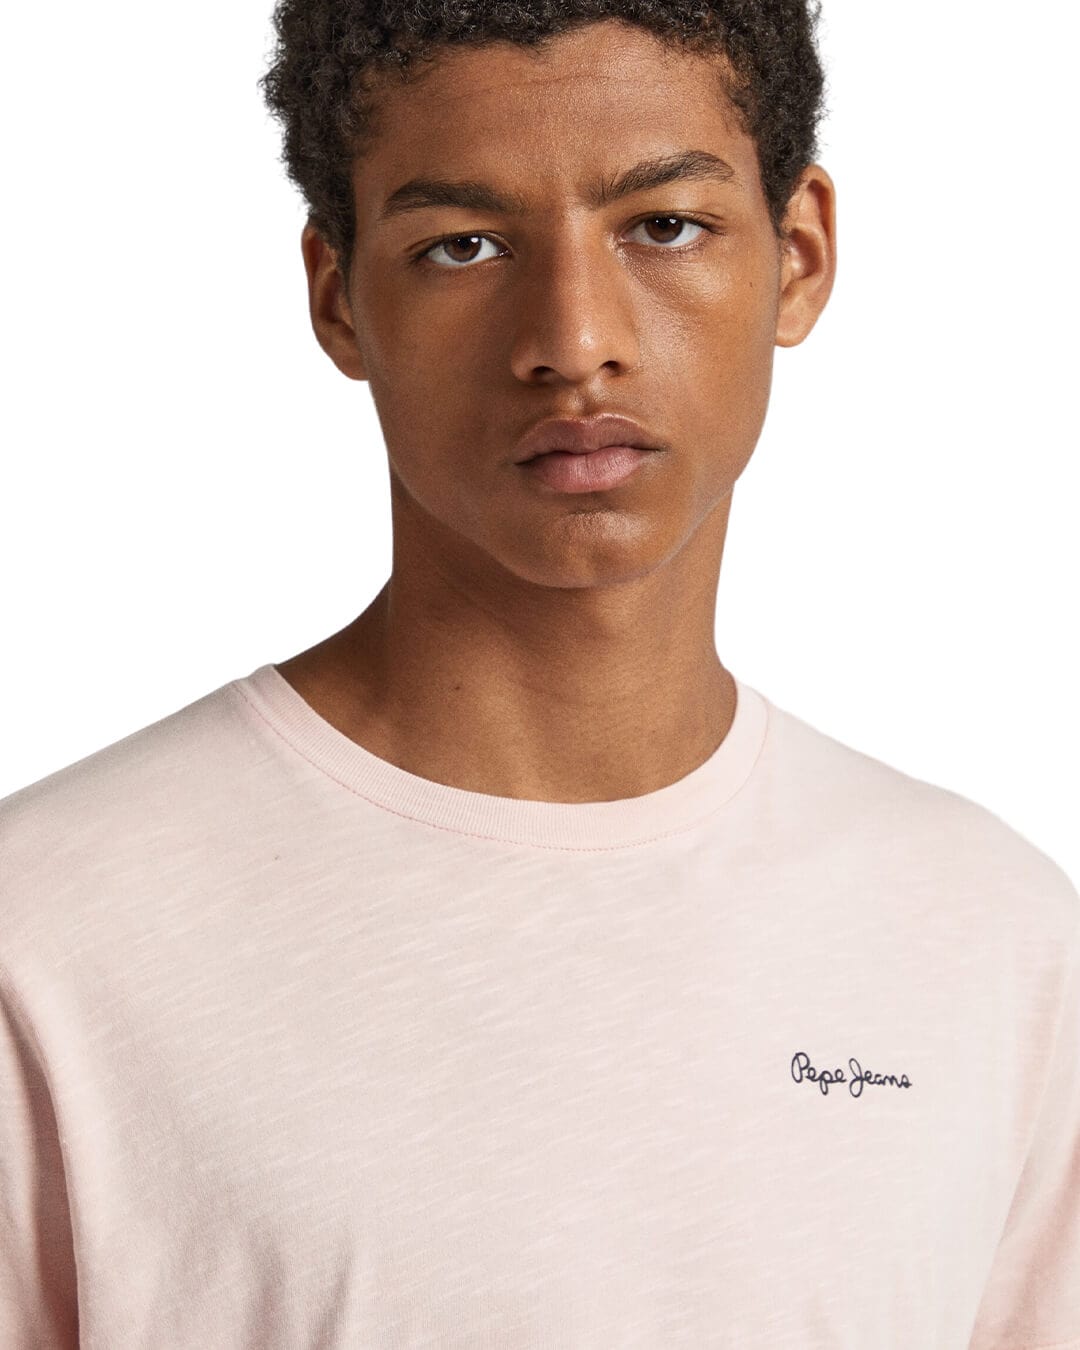 Pepe Jeans Fine - Bortex Pink Tailoring T-Shirt Wiltshirte | Bortex